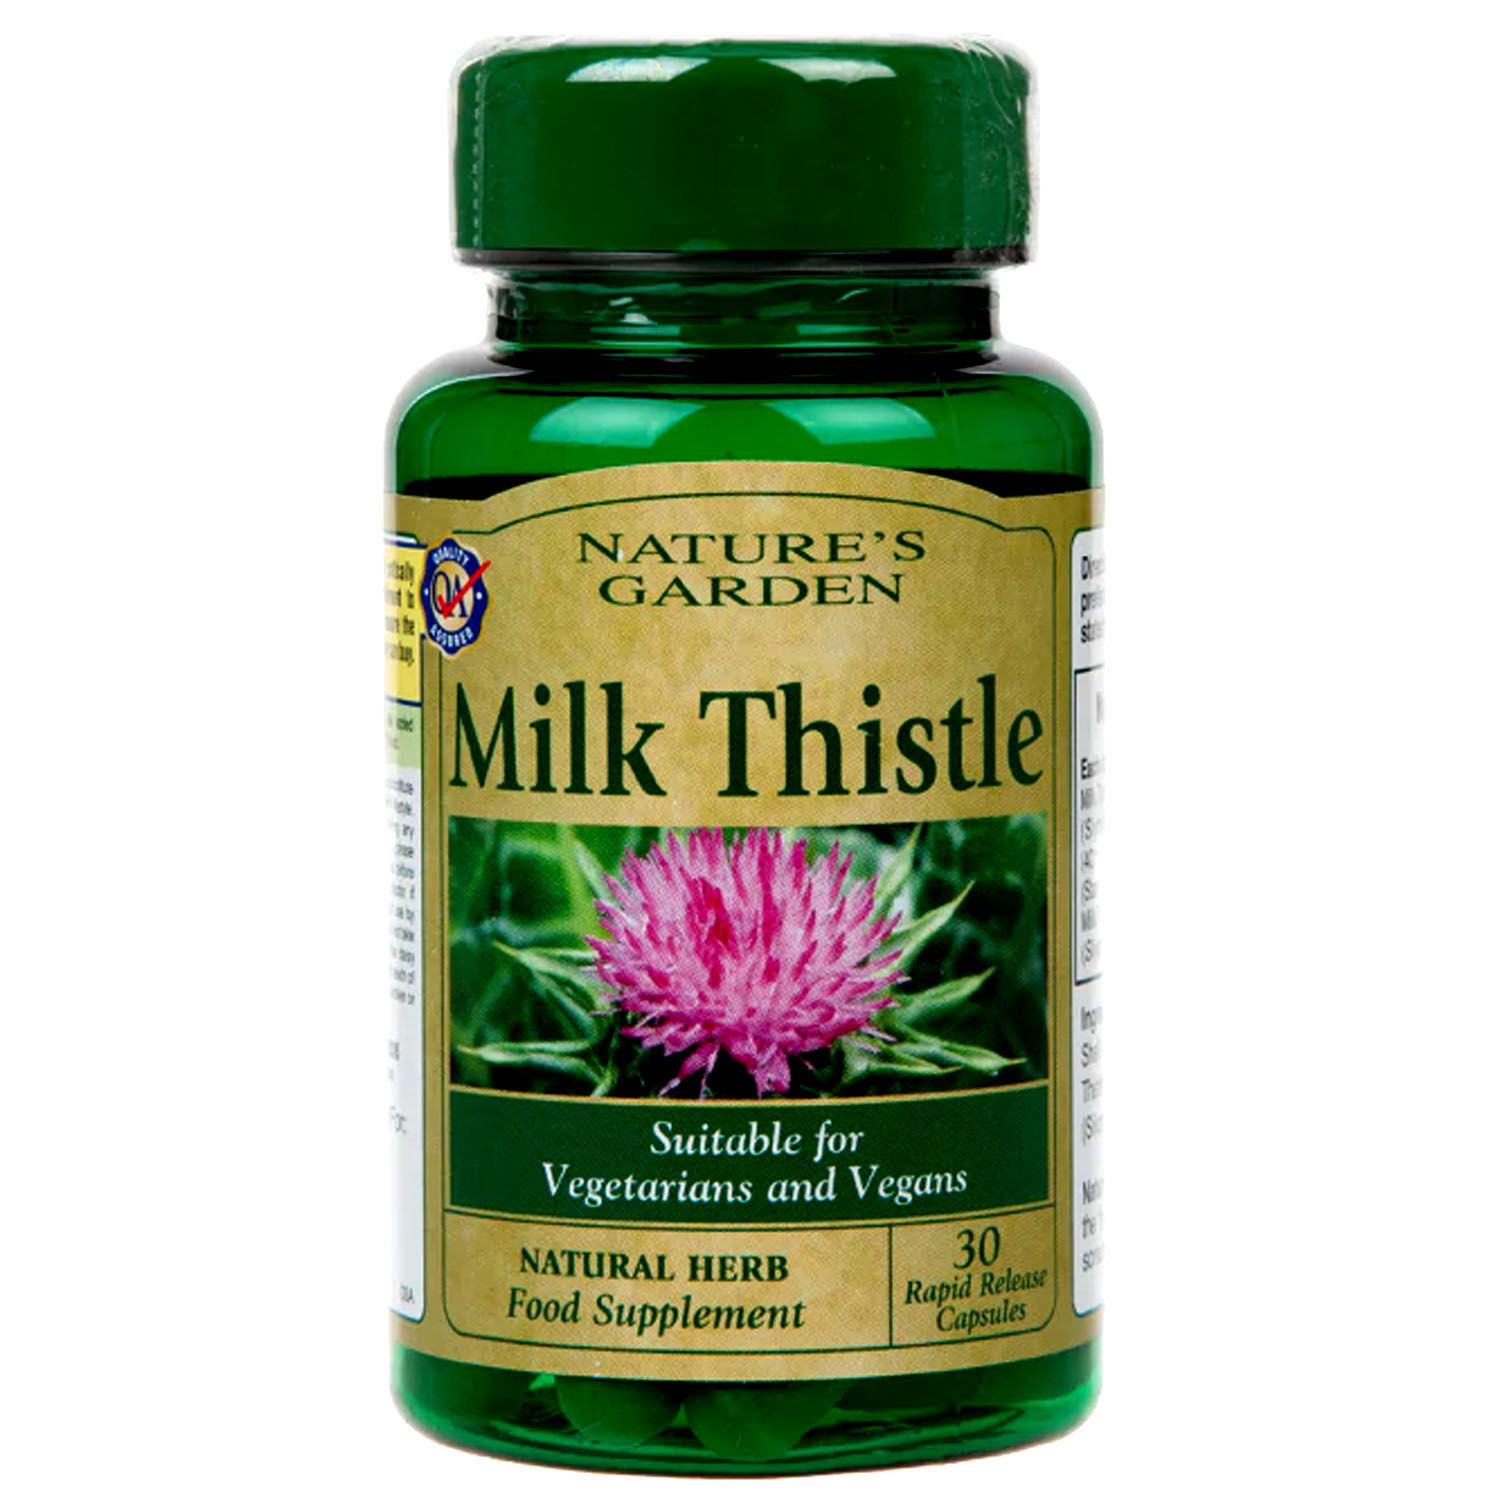 Buy Nature's Garden Milk Thistle, 30 Capsules Online